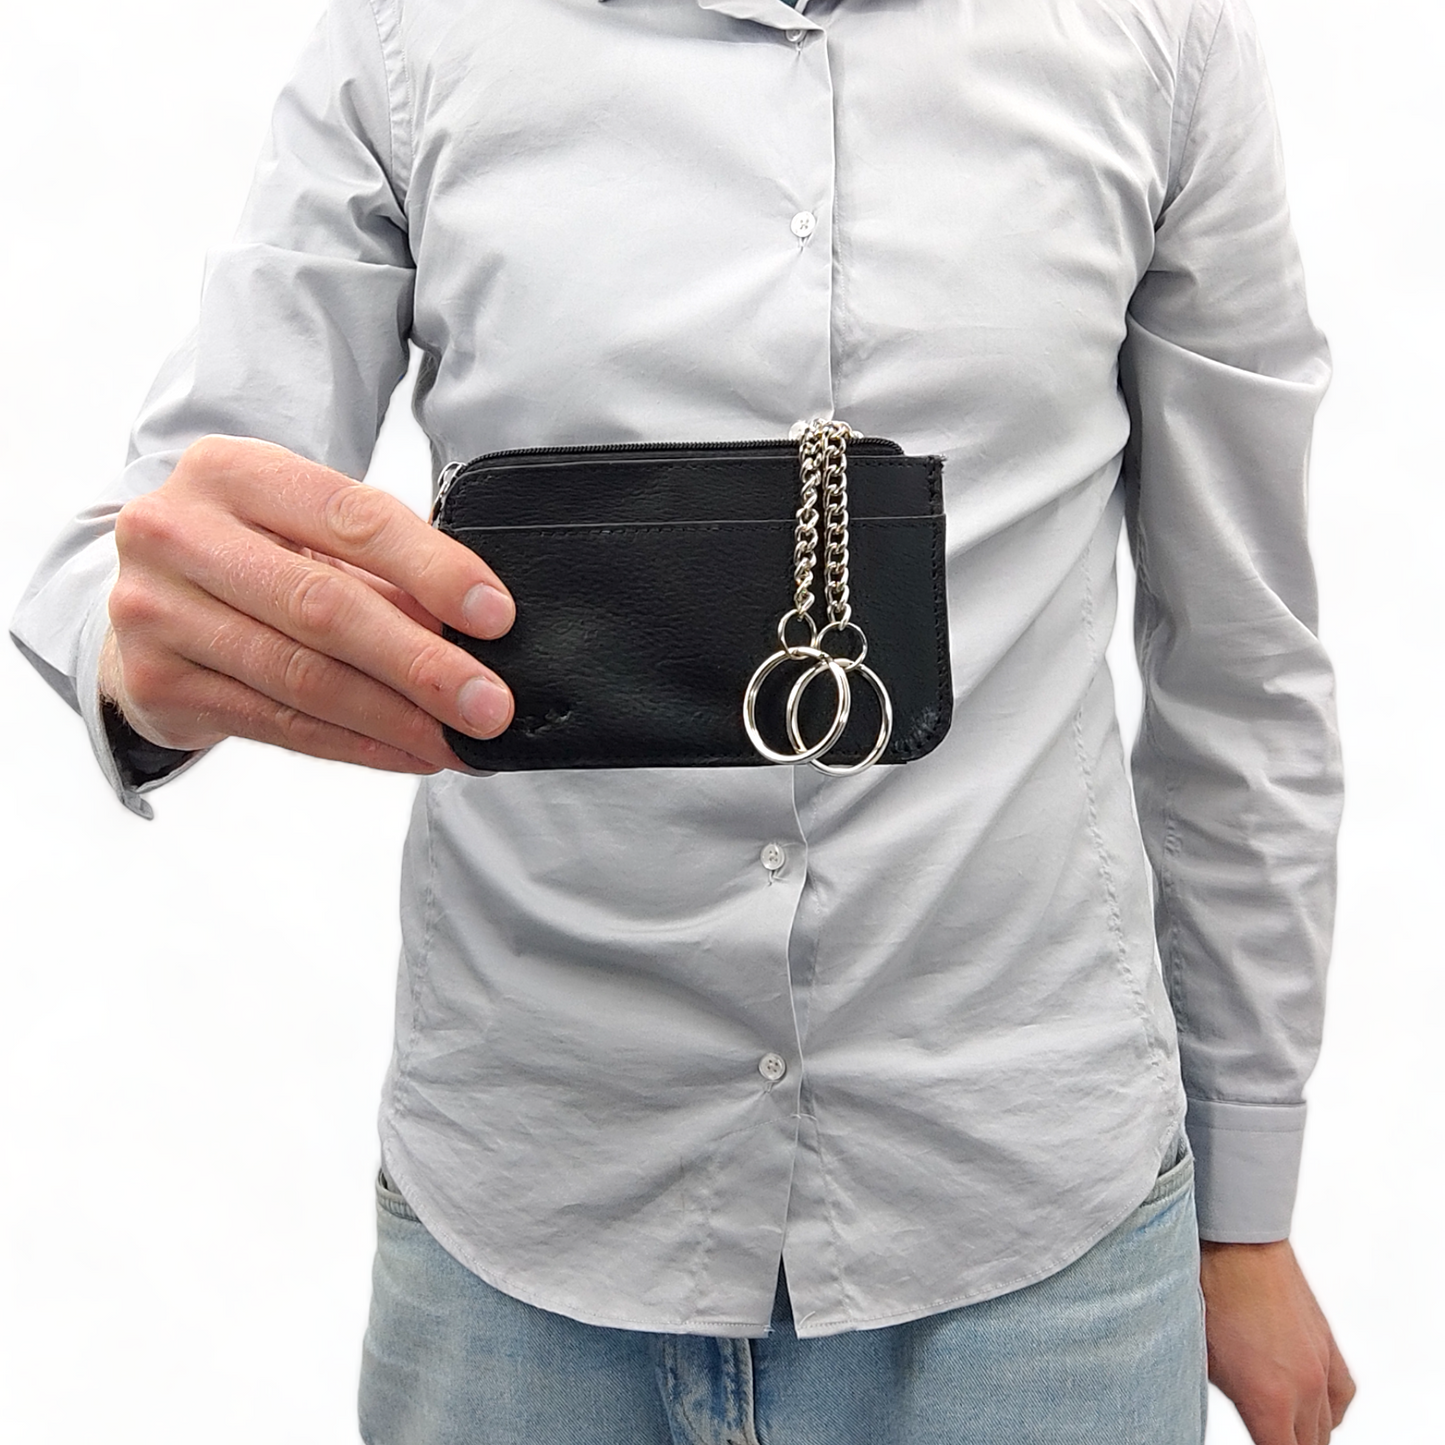 Leather Key Case - Key Bag Long - 2 Rings